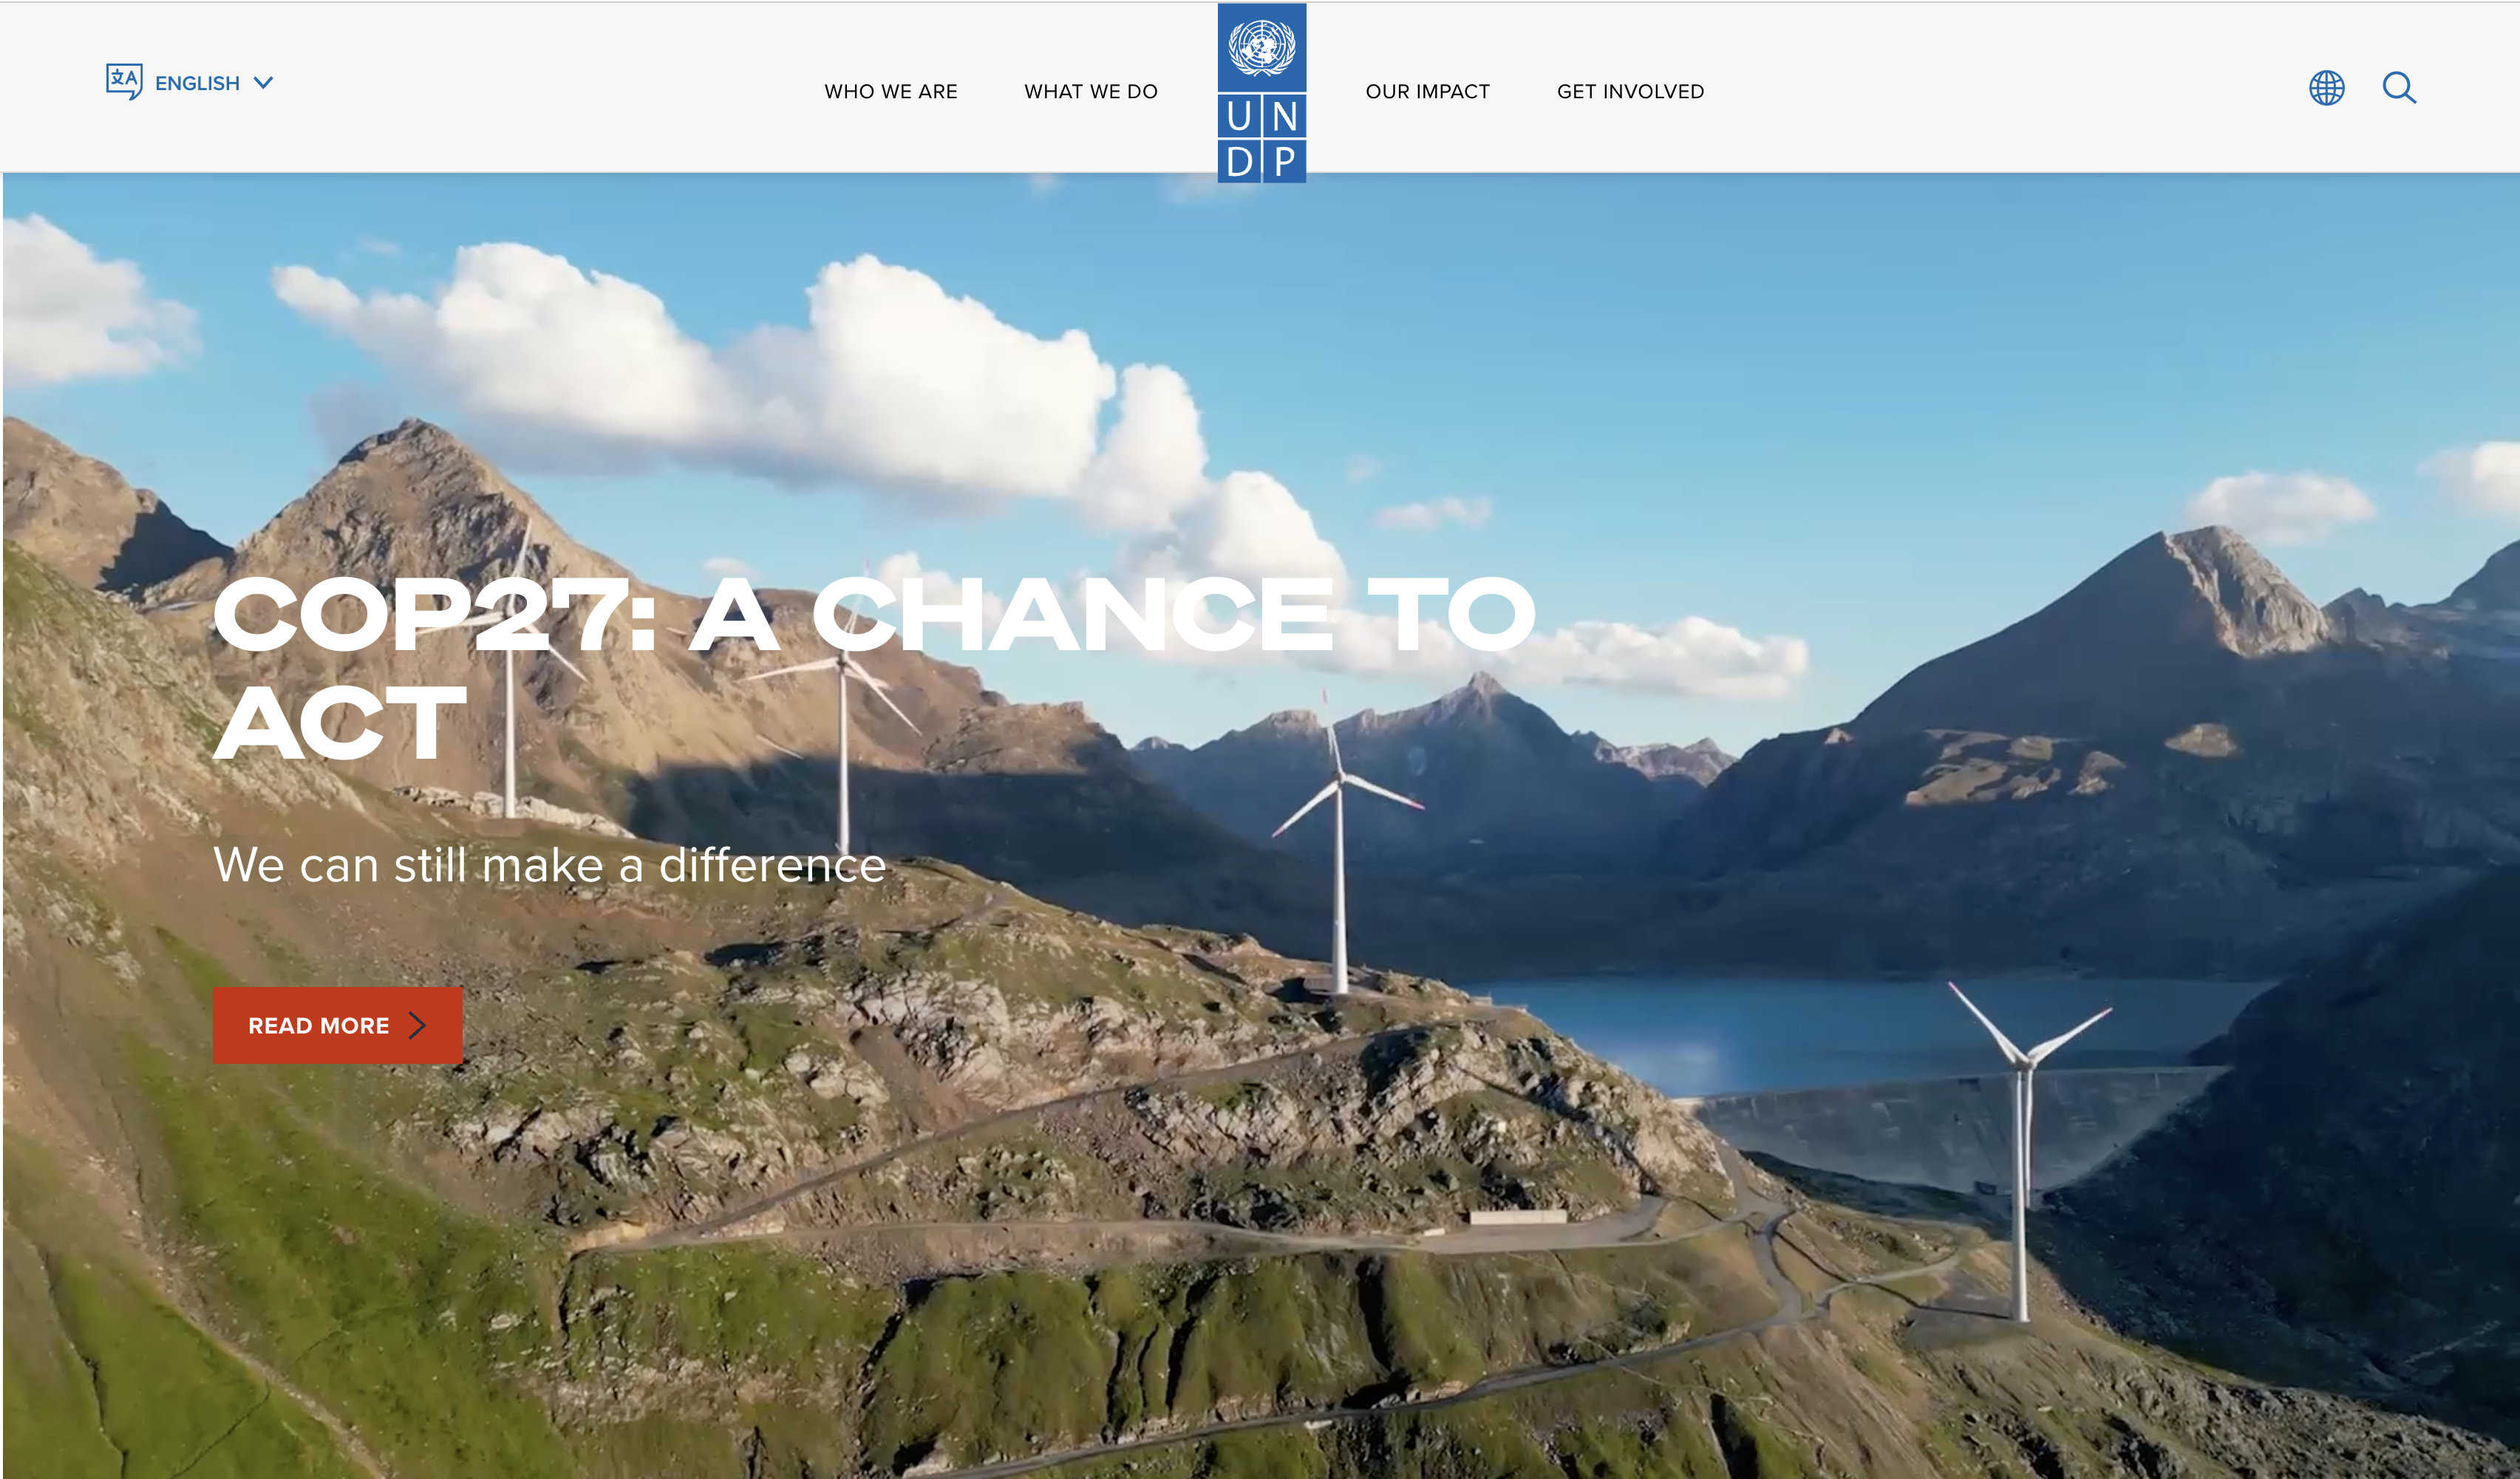 Drupal website for United Nations Development Program